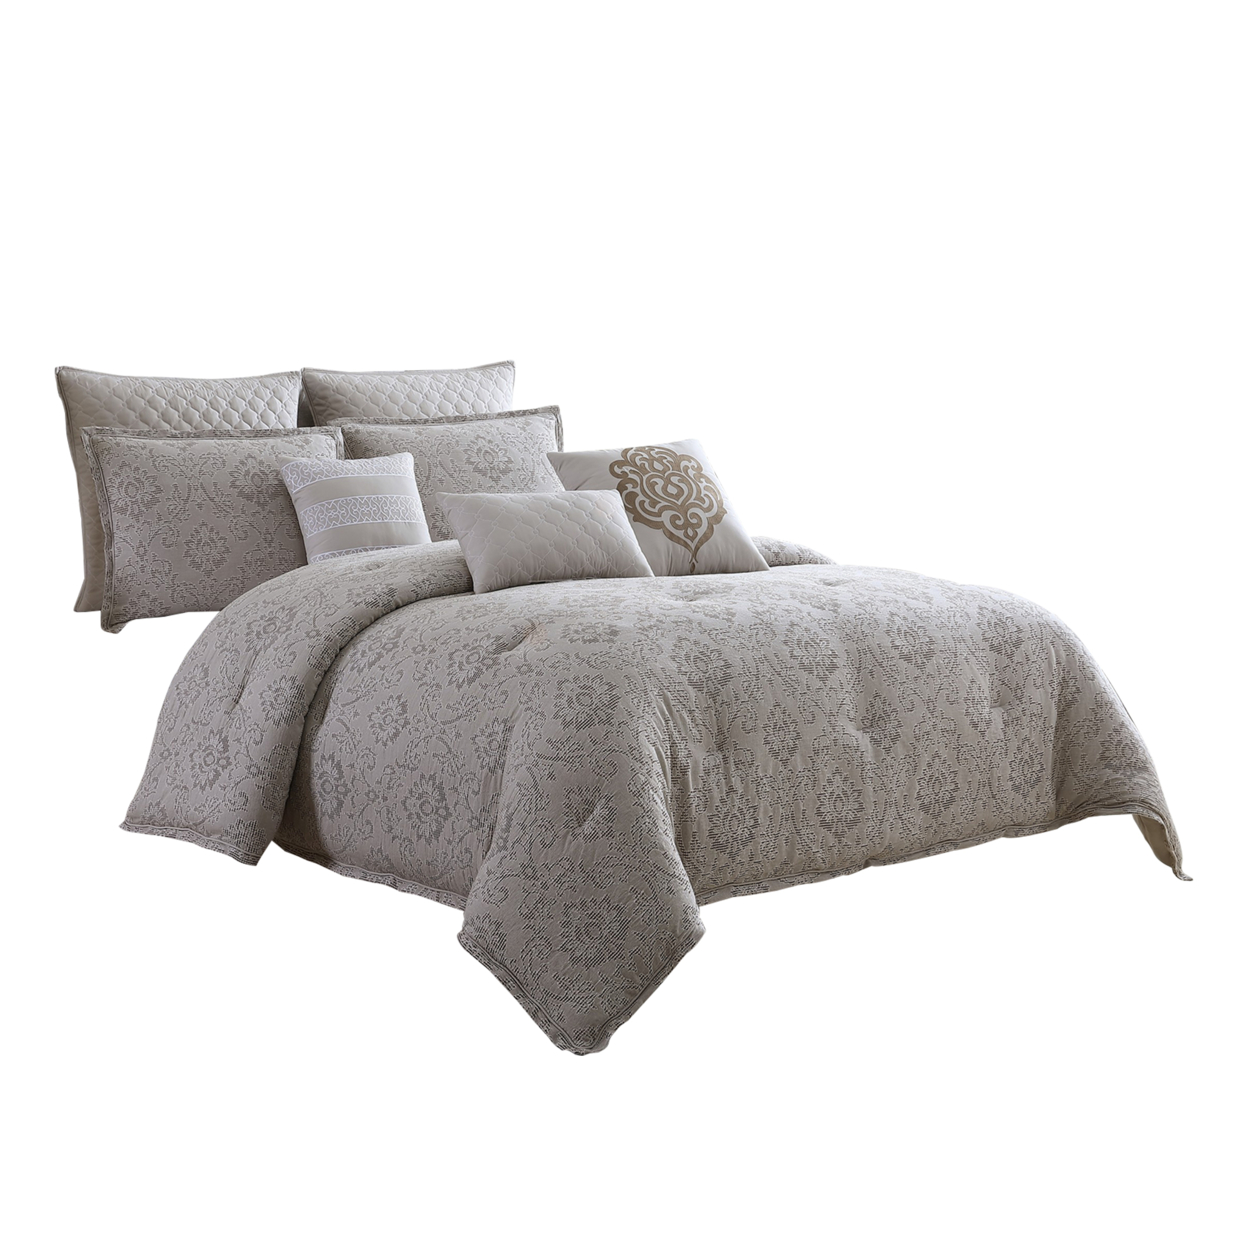 10 Piece King Cotton Comforter Set With Textured Floral Print, Gray- Saltoro Sherpi